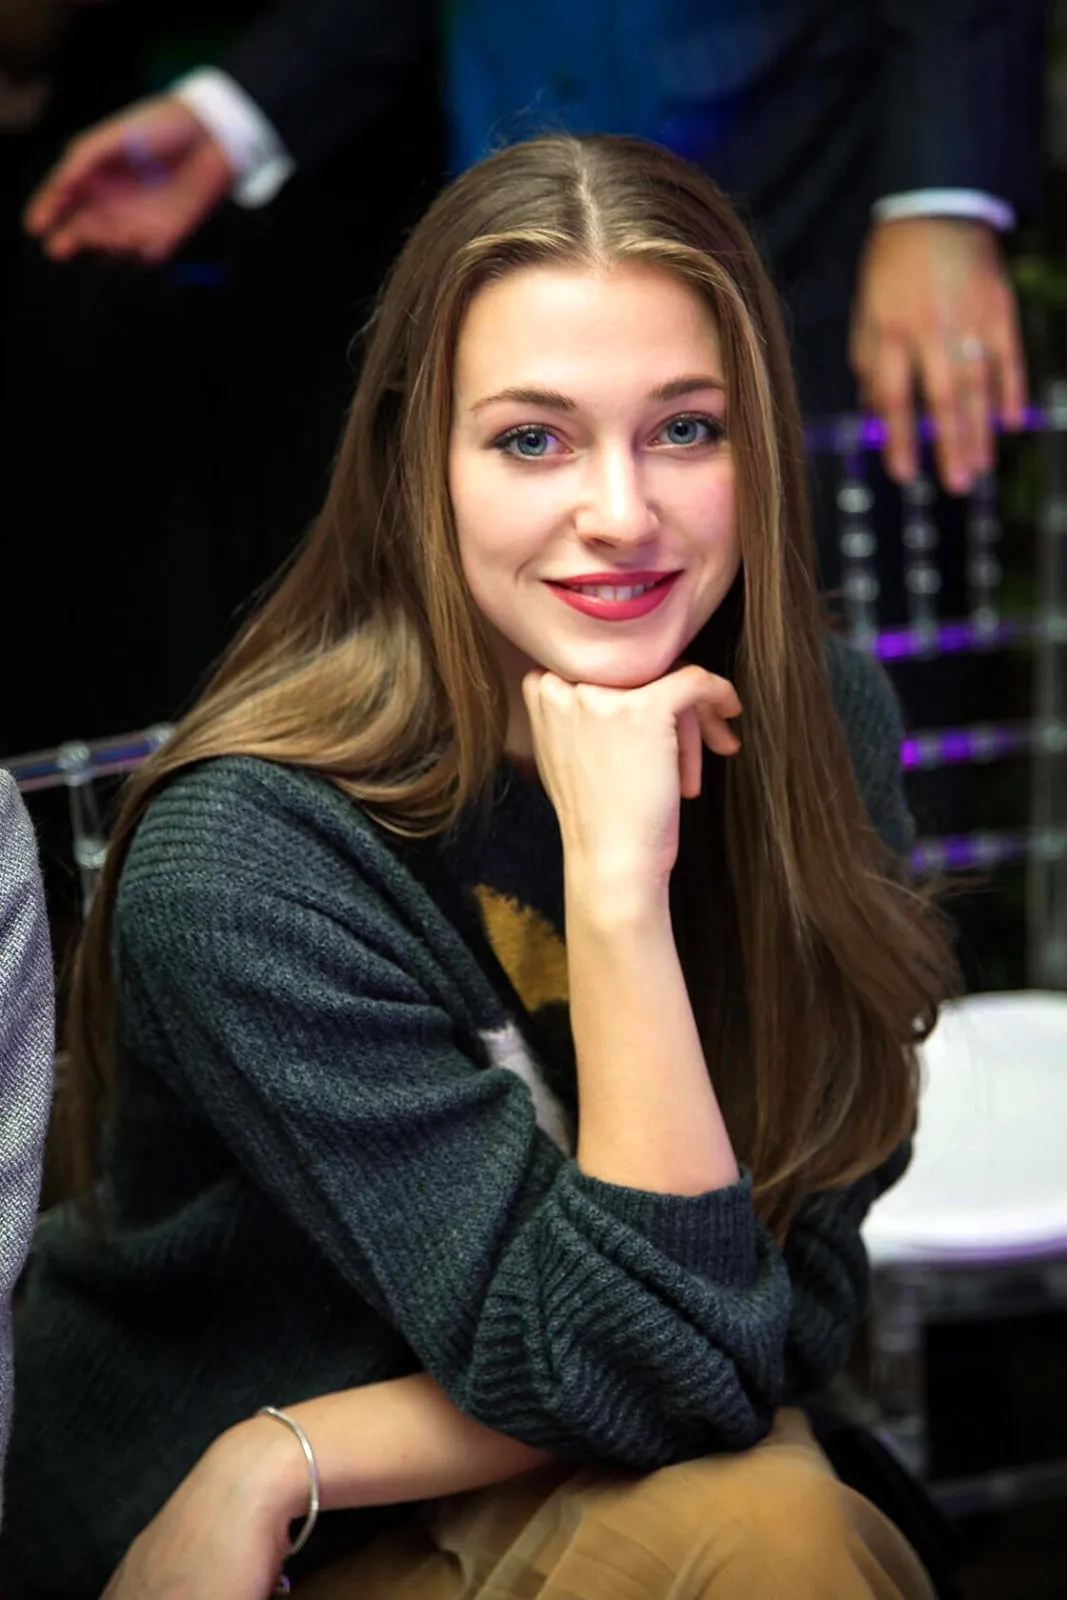 Александра Никифорова